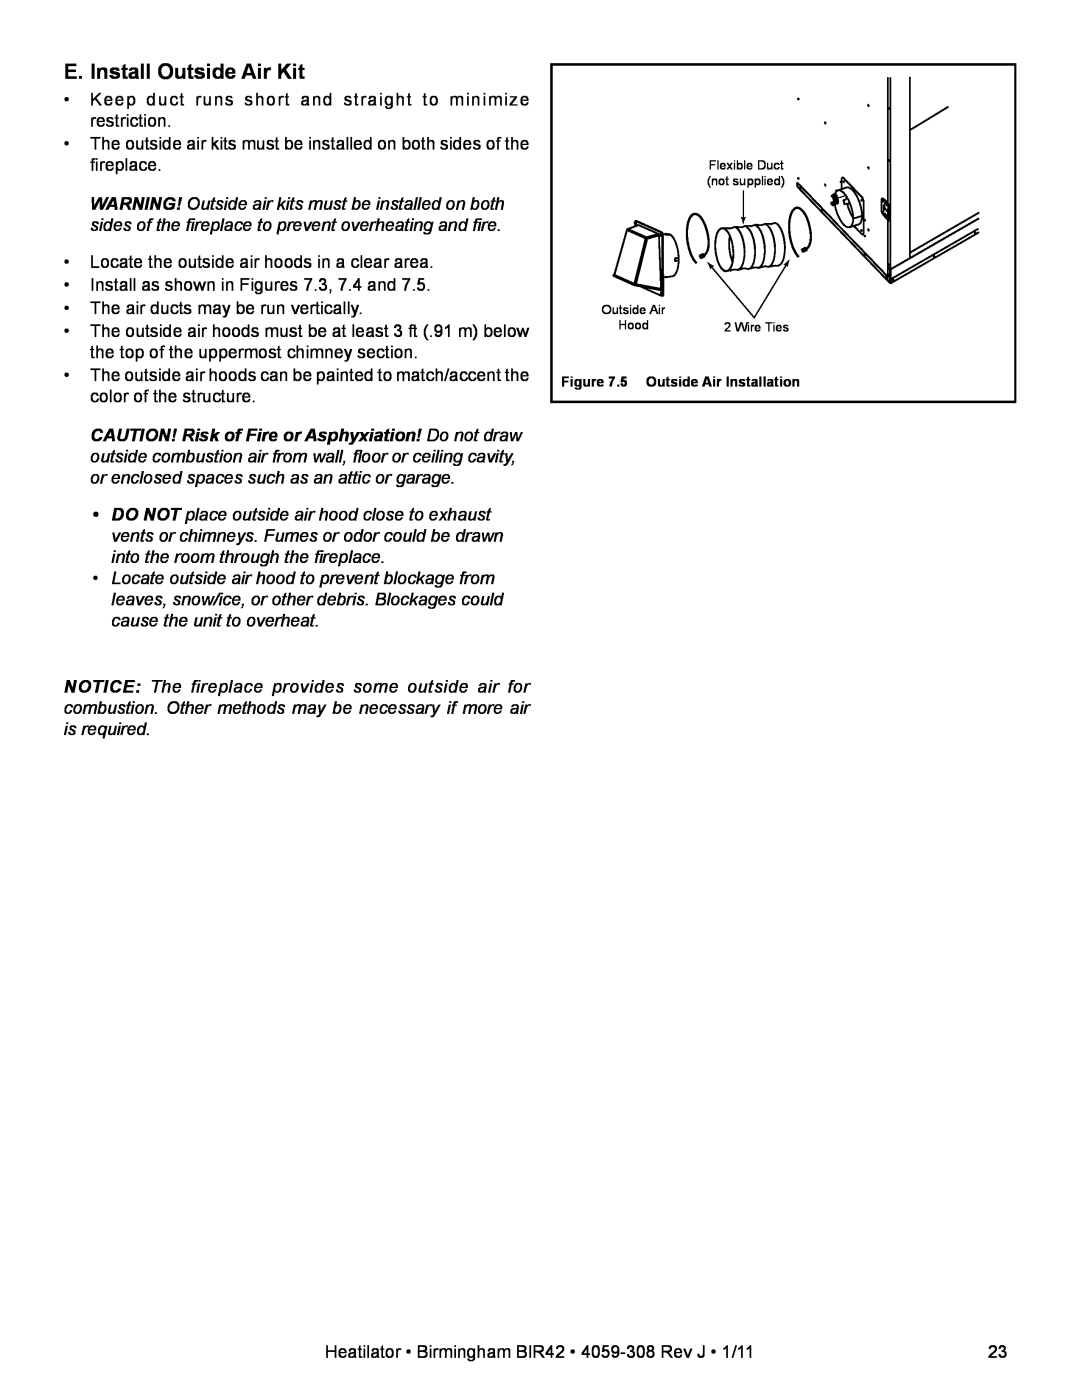 Heatiator BIR42 owner manual E. Install Outside Air Kit 